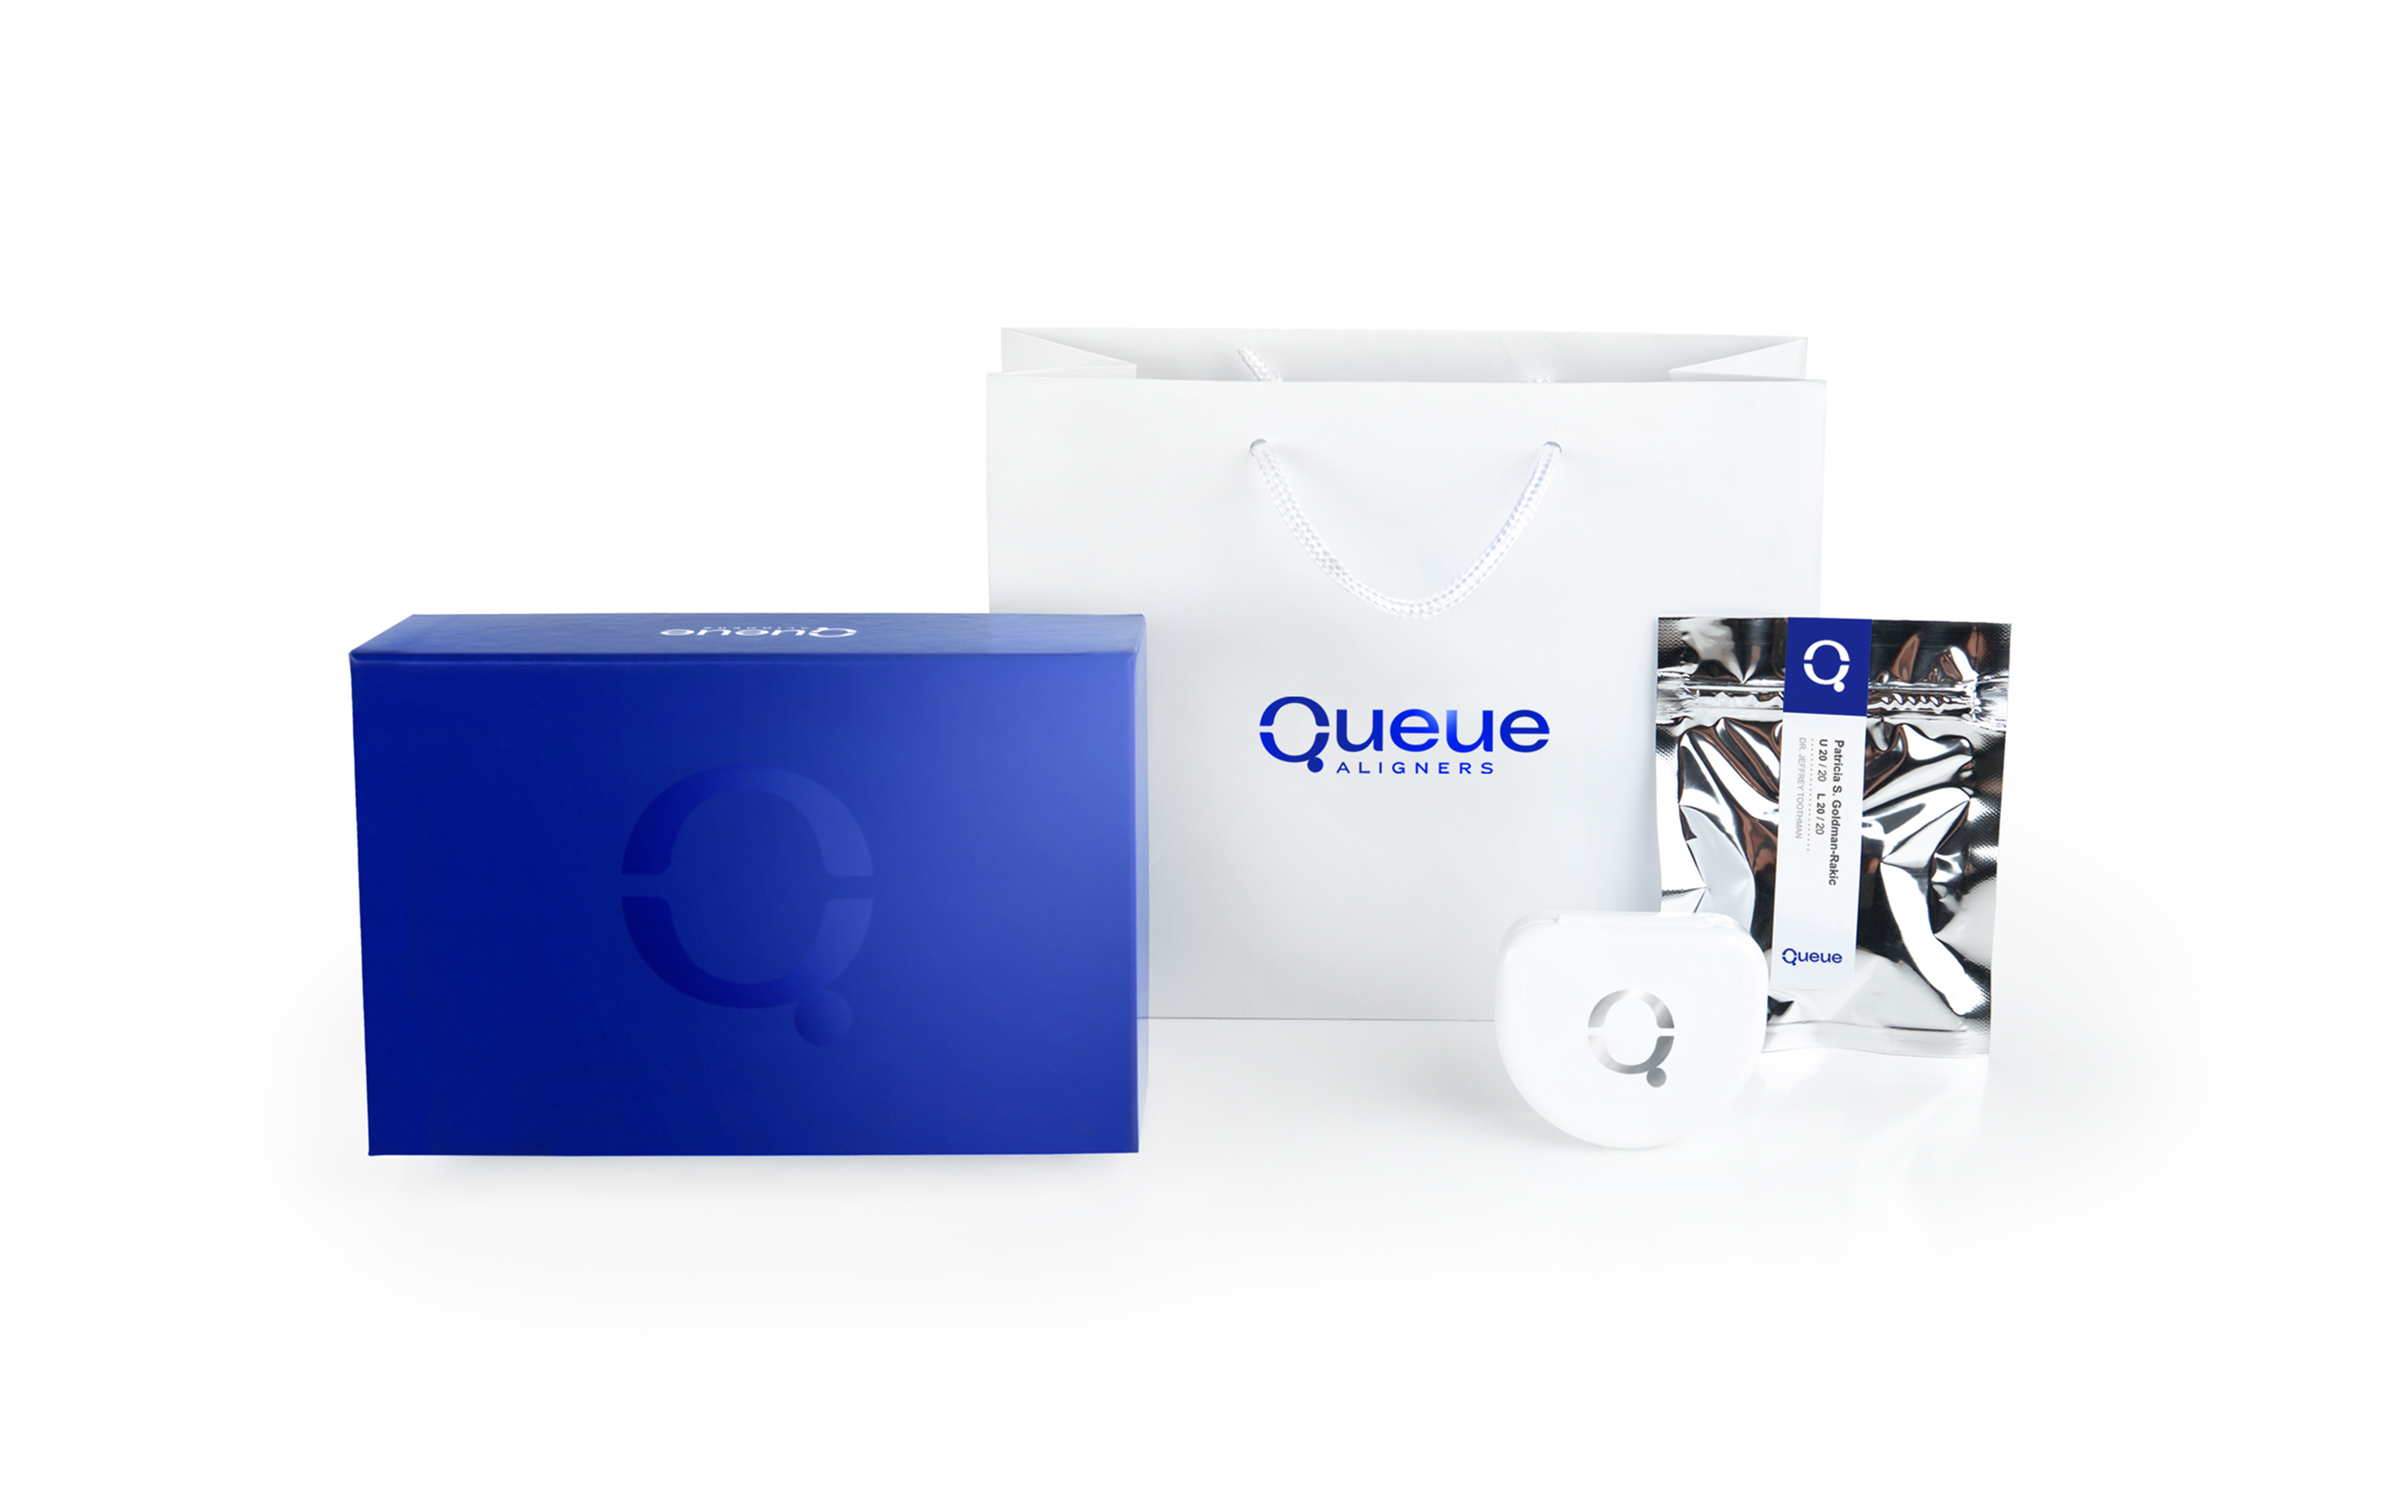 Queue Aligners Branding and Packaging Design by Lisa Gorham Creative ...